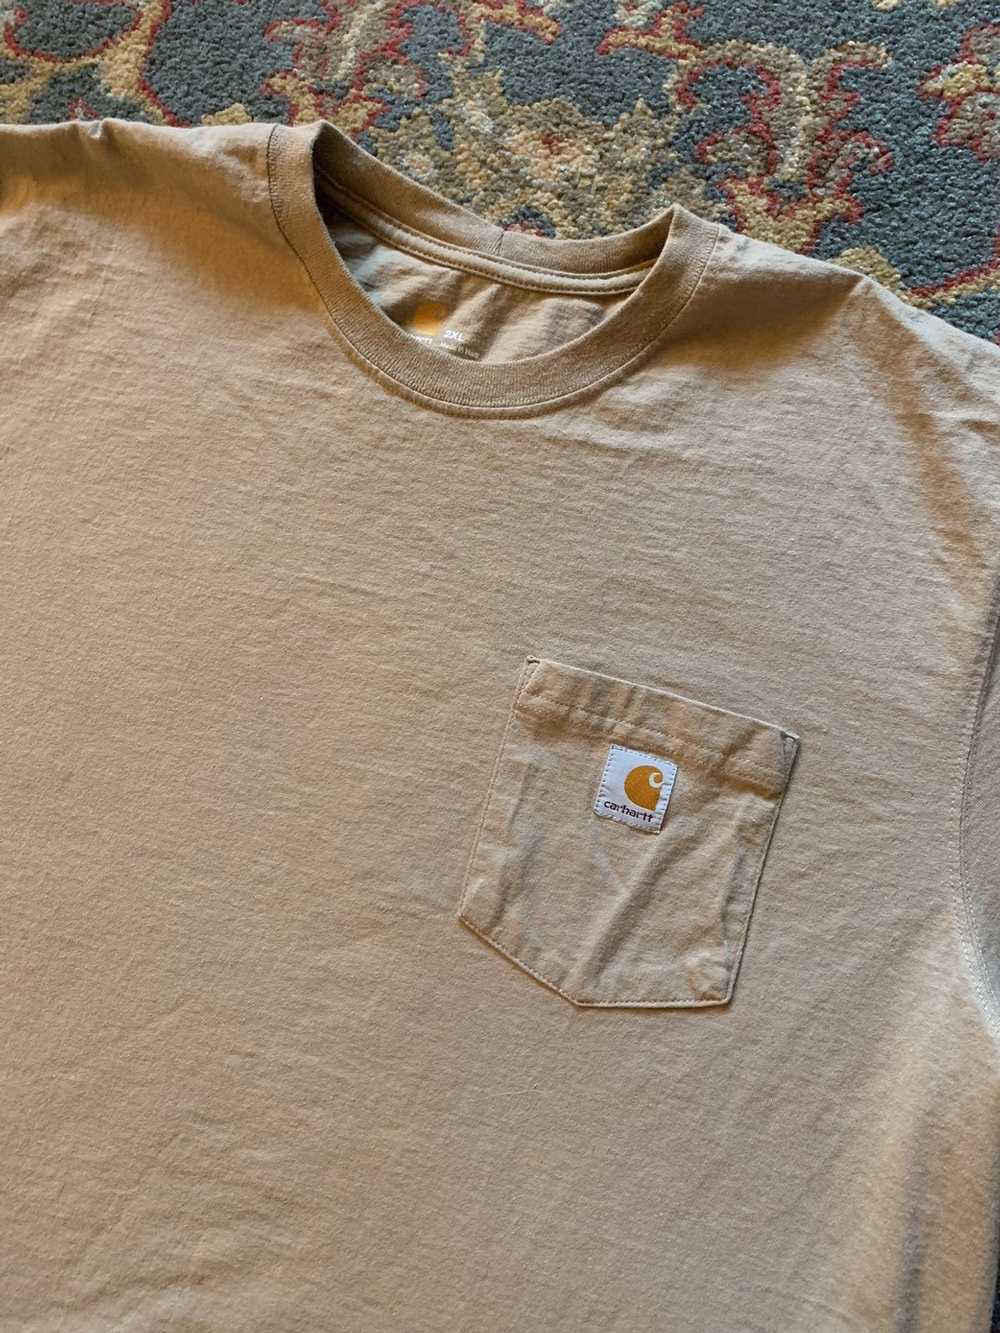 Carhartt Carhartt pocket t-shirt - image 2